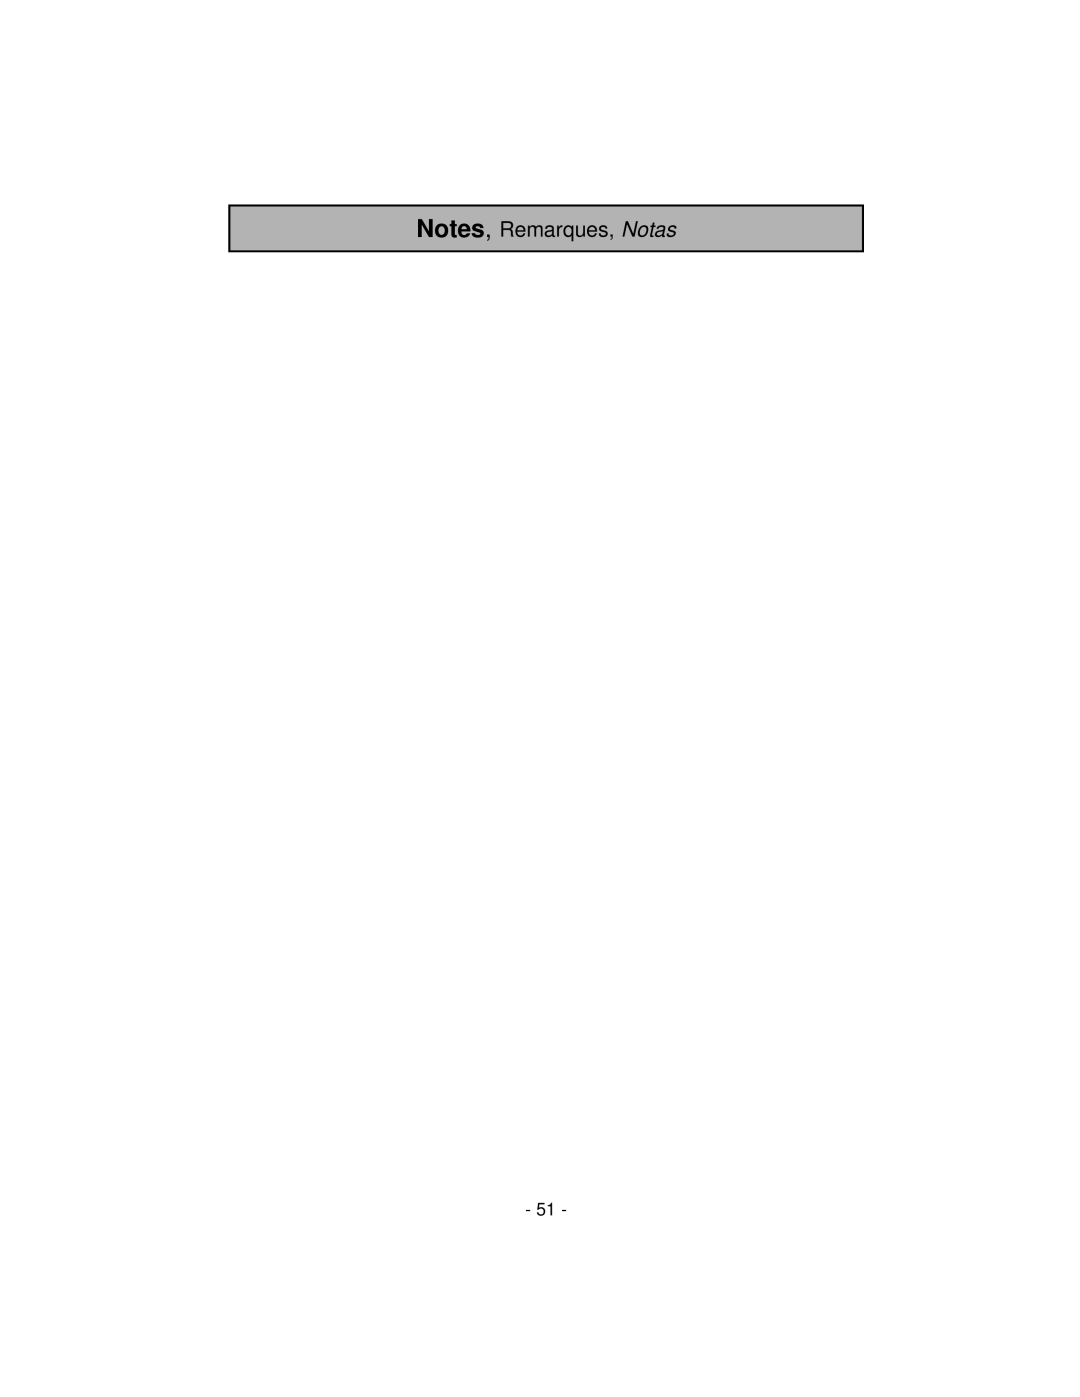 Panasonic MC-V7319 manuel dutilisation Notes, Remarques, Notas 